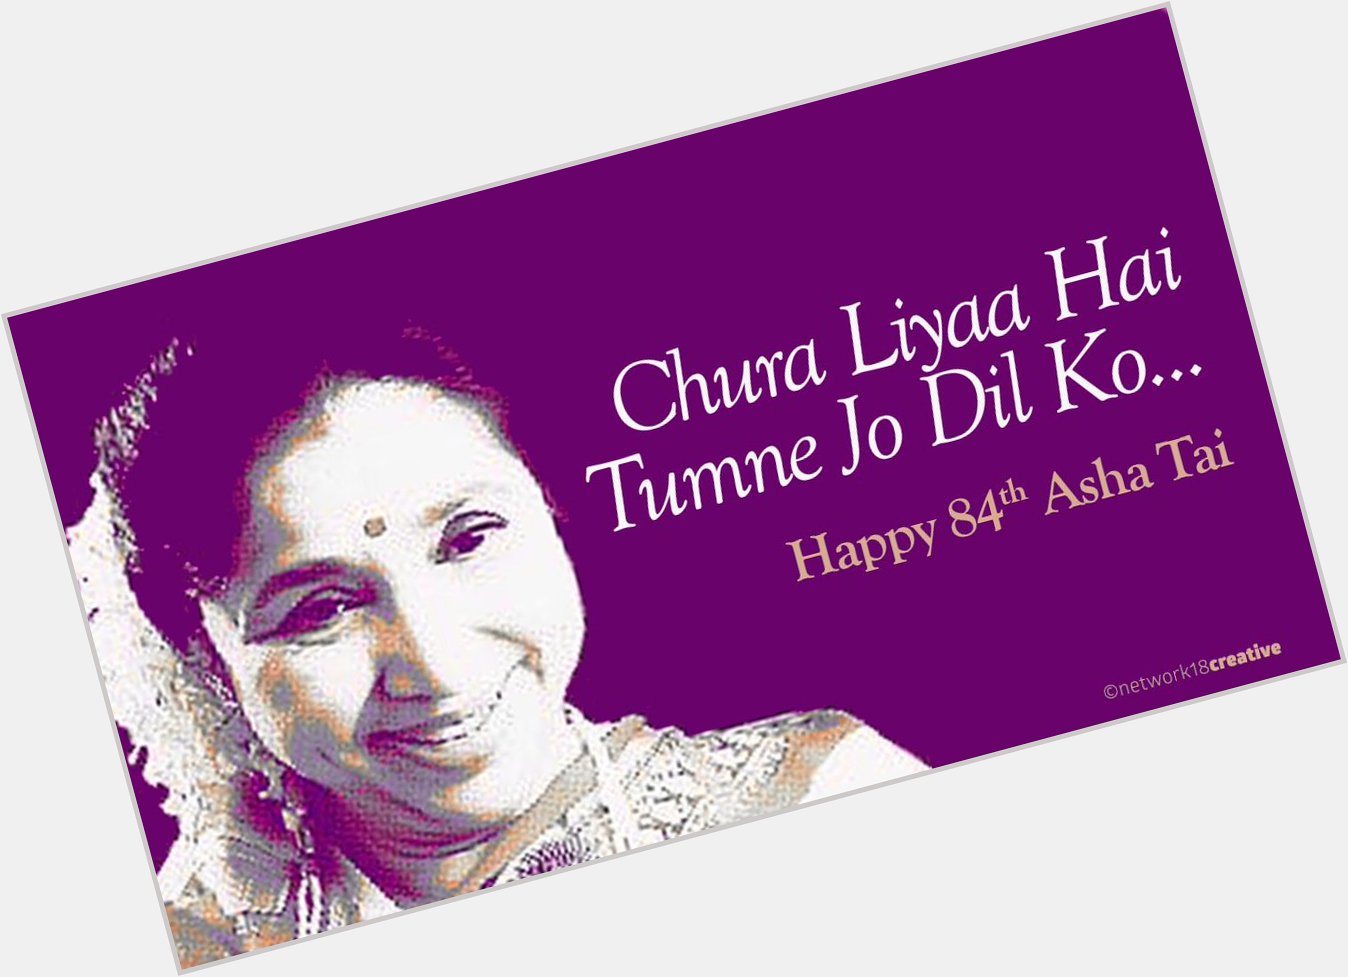 Wishing Asha Bhosle a very Happy Birthday! 